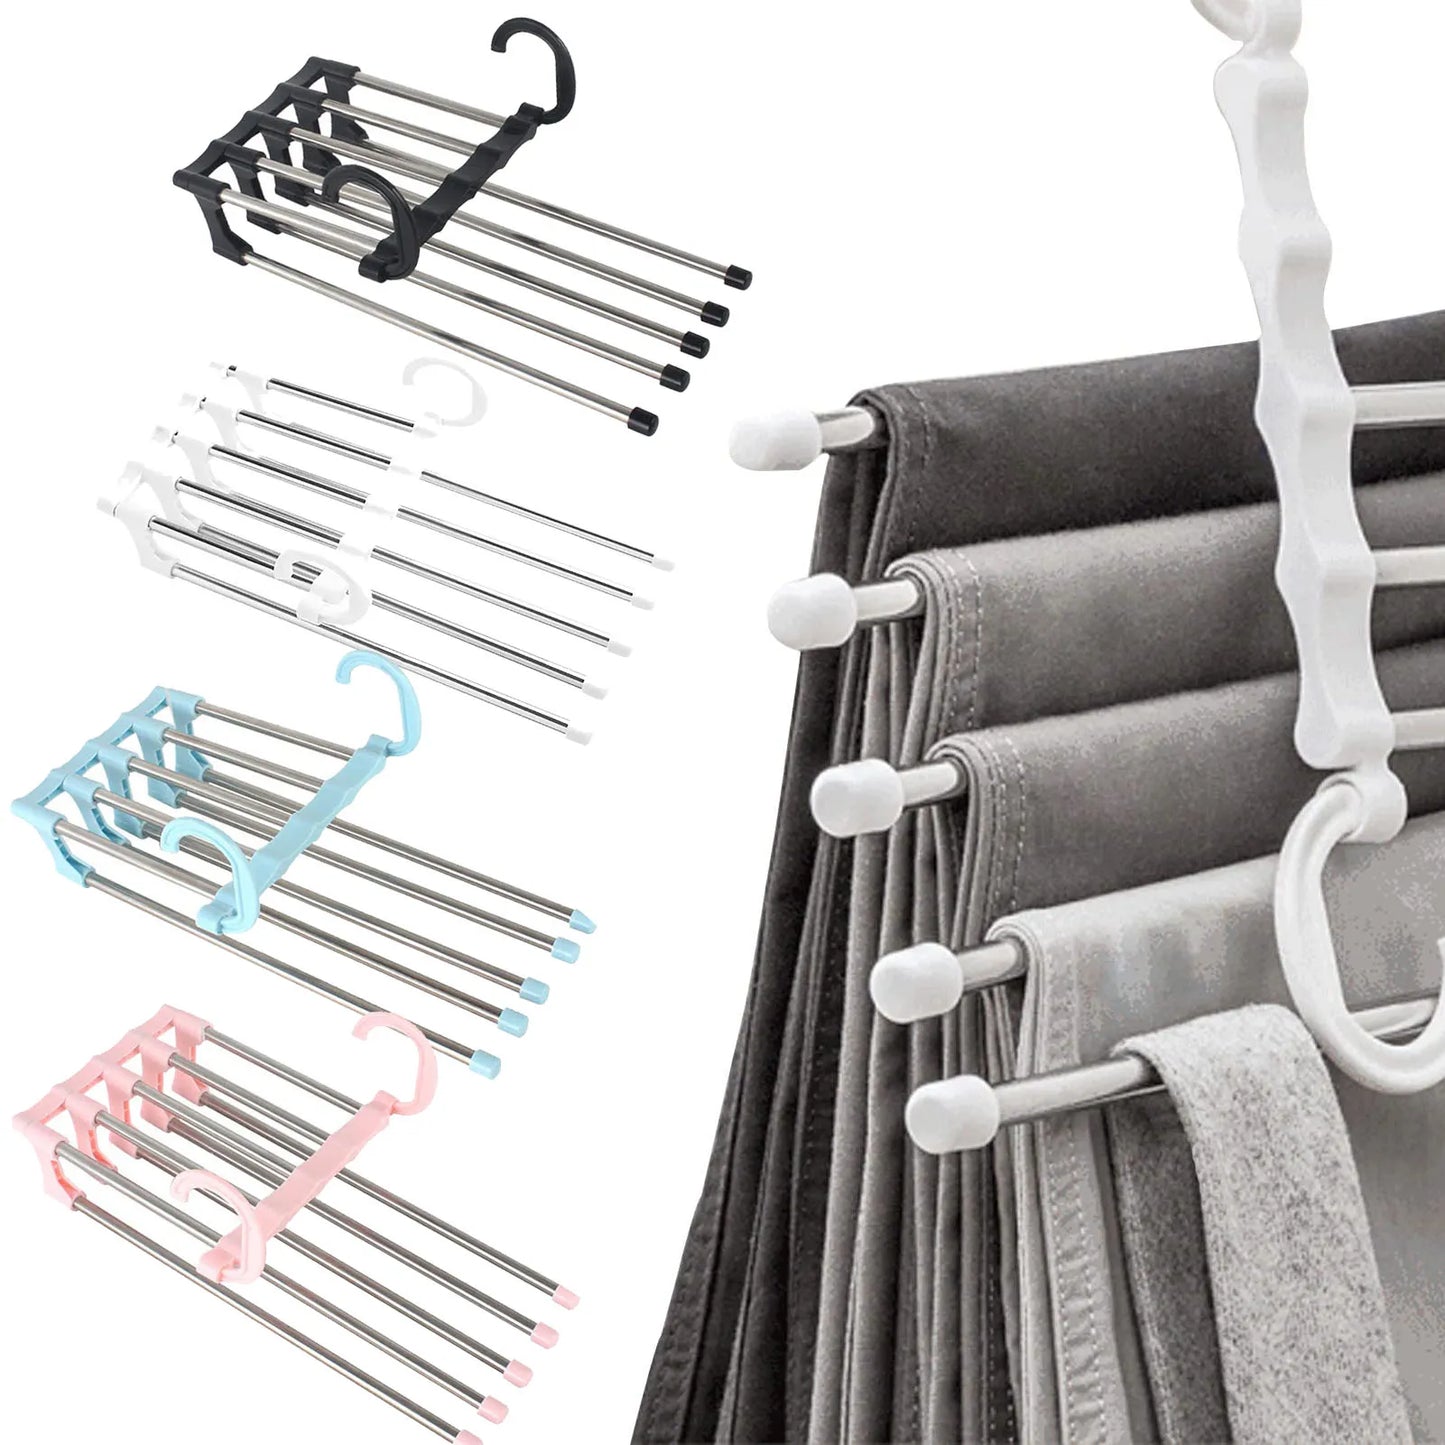 Folding Pants Storage Multifunctional Hanger for Pant Rack Hanger Clothes Organizer Hangers Save Wardrobe Space Bedroom Closets